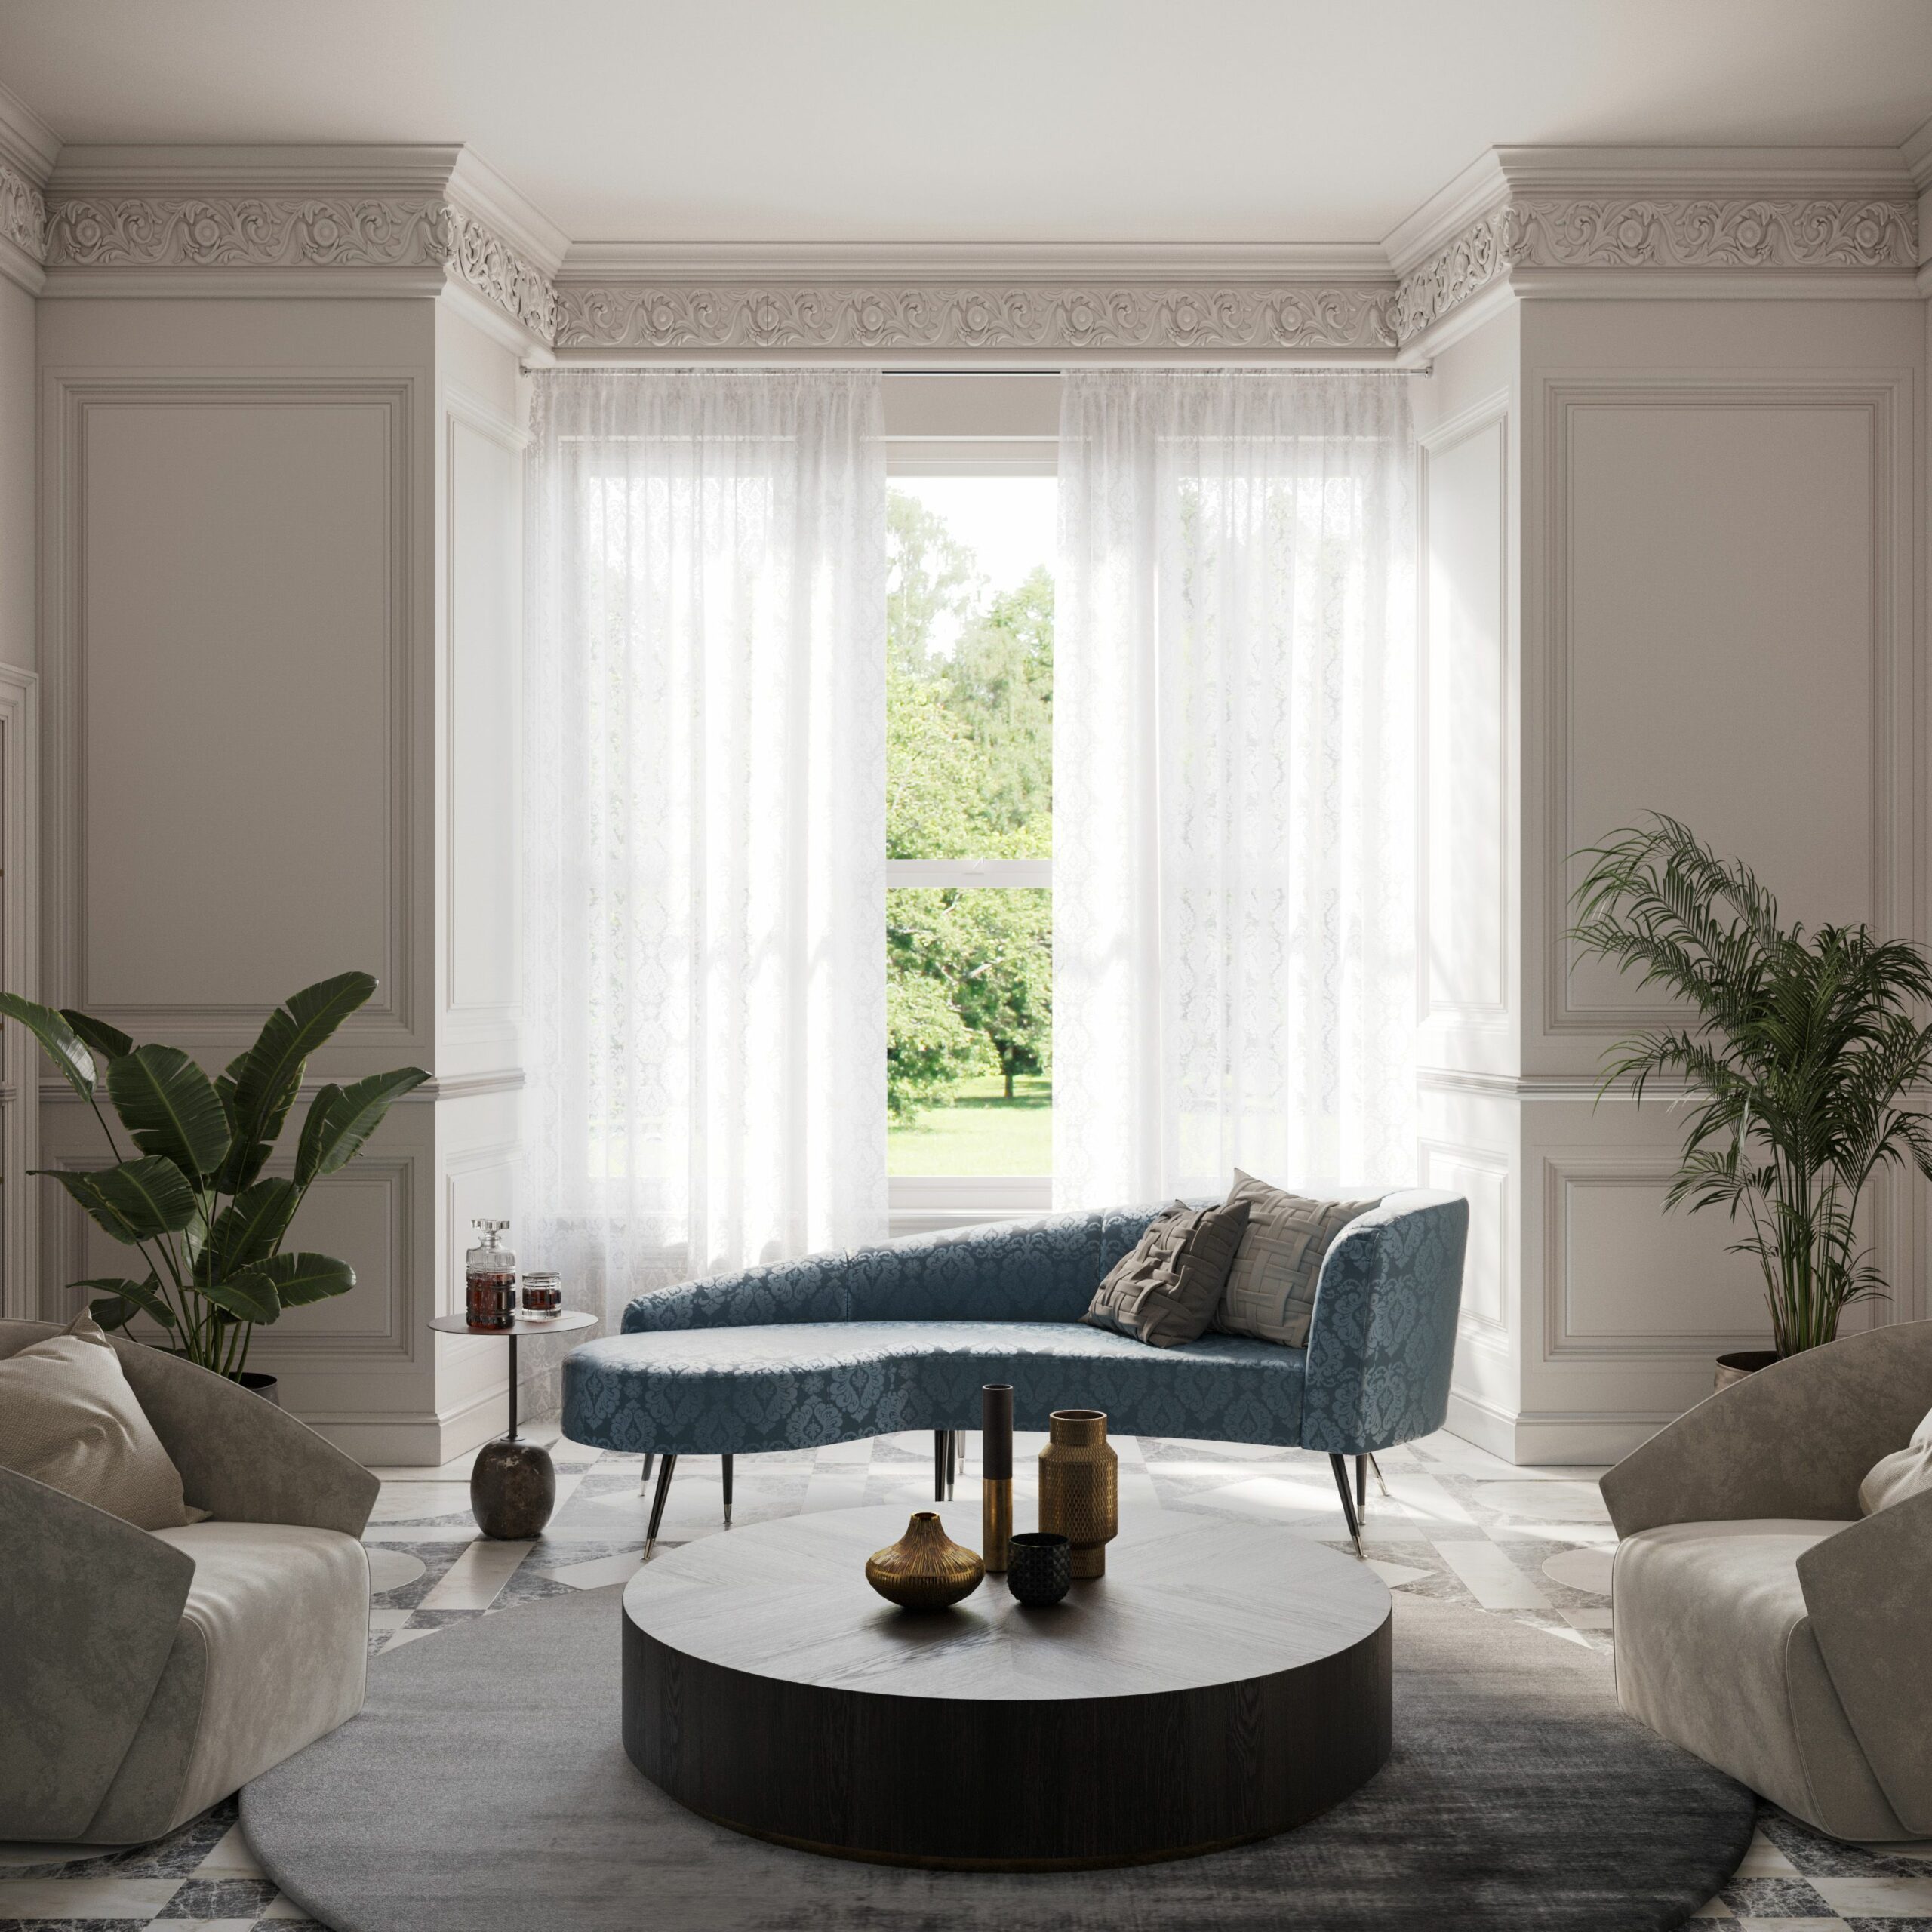 super prime real estate interior visualisation - INT_NM_R&D_HARRODS WINDOW VIEW 001